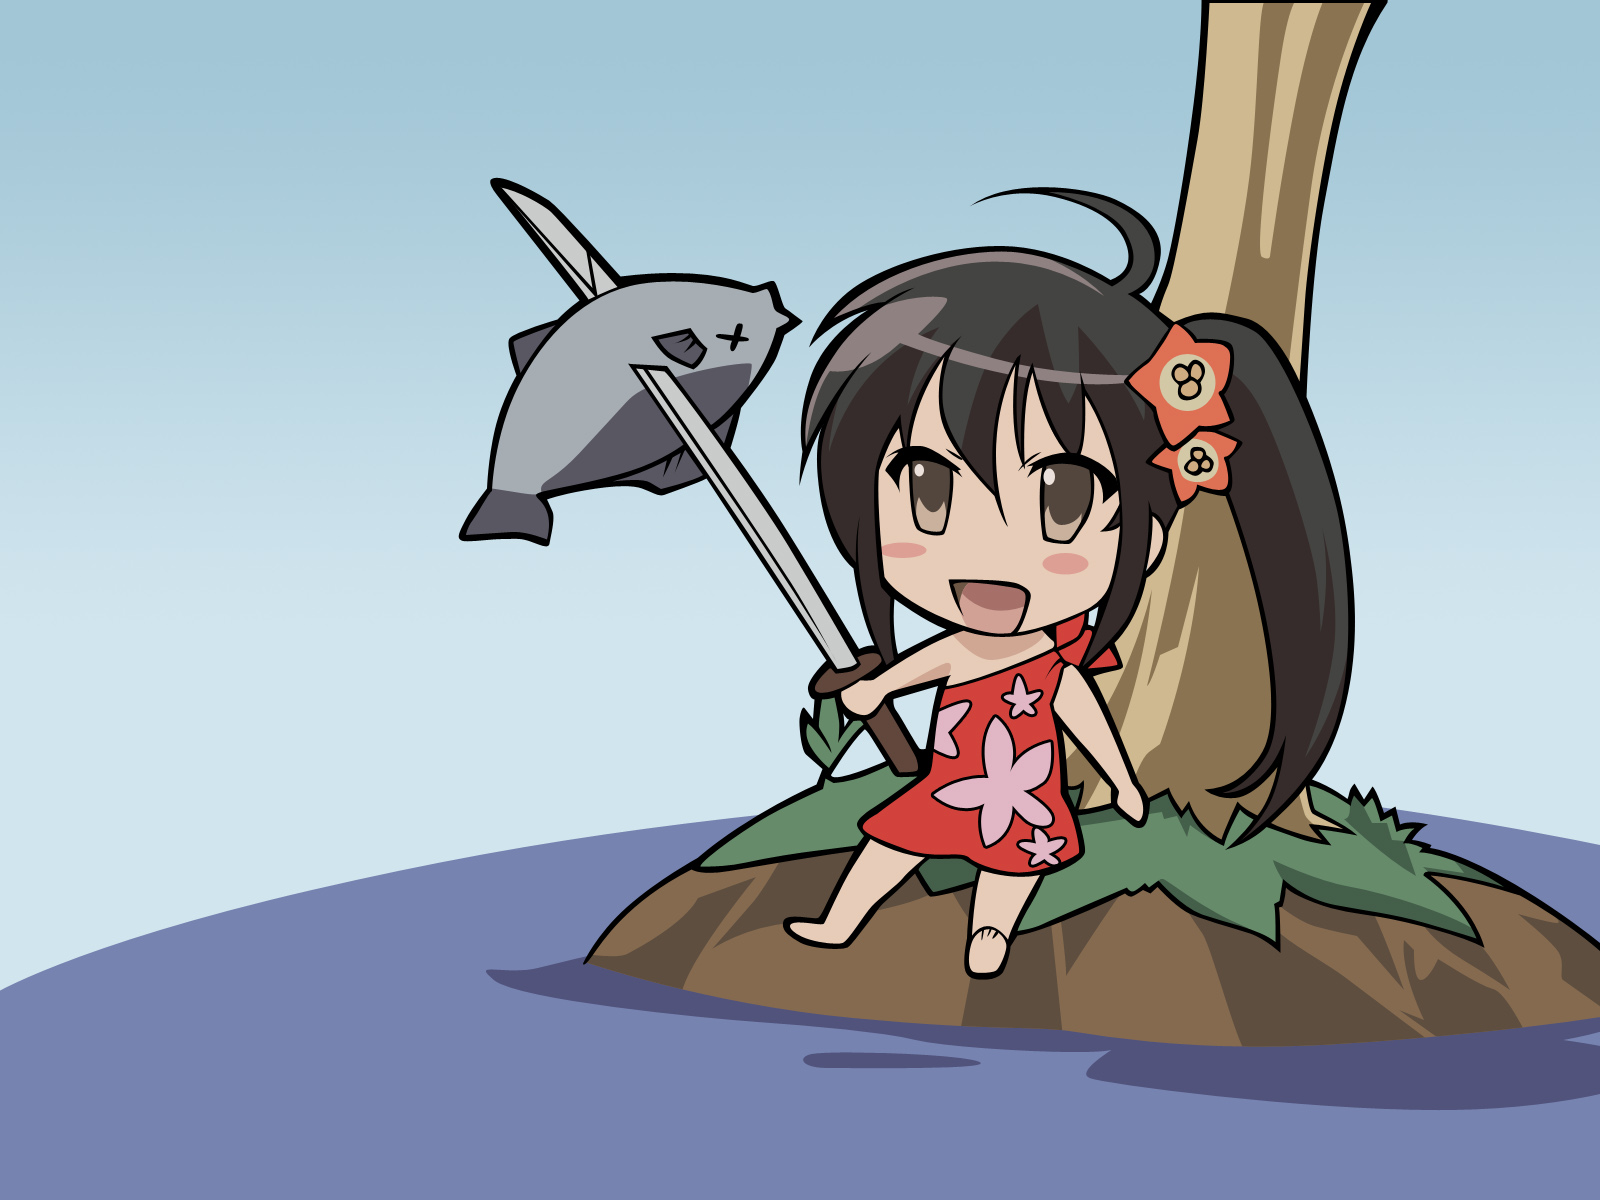 Chibi Shana-tan holding a sword on an island with a fish